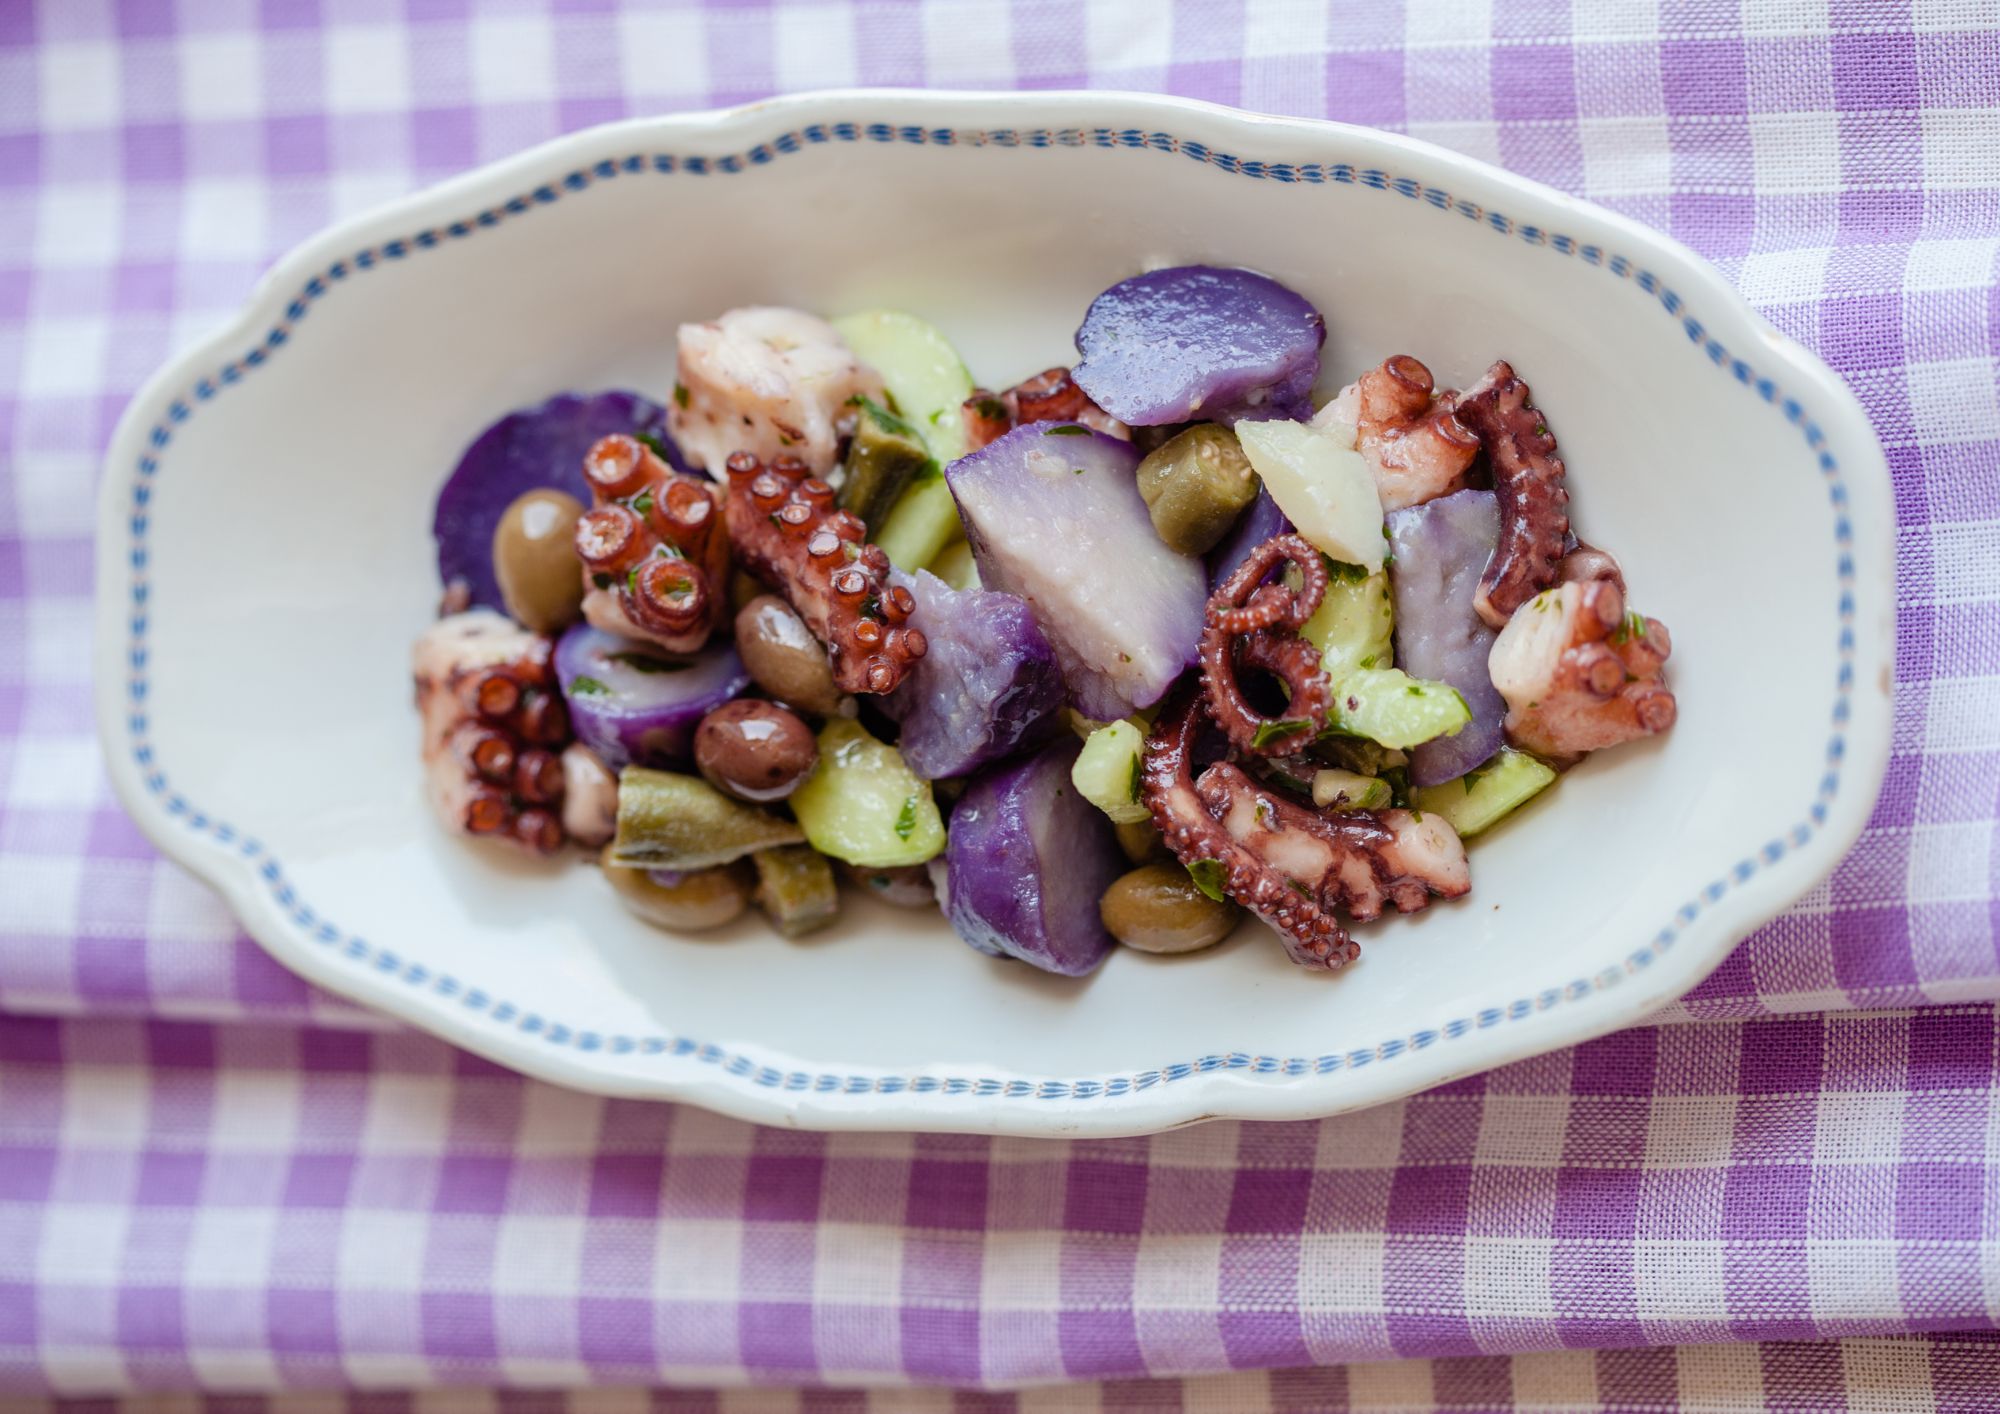 Octopus, celery and Bleuet potato salad